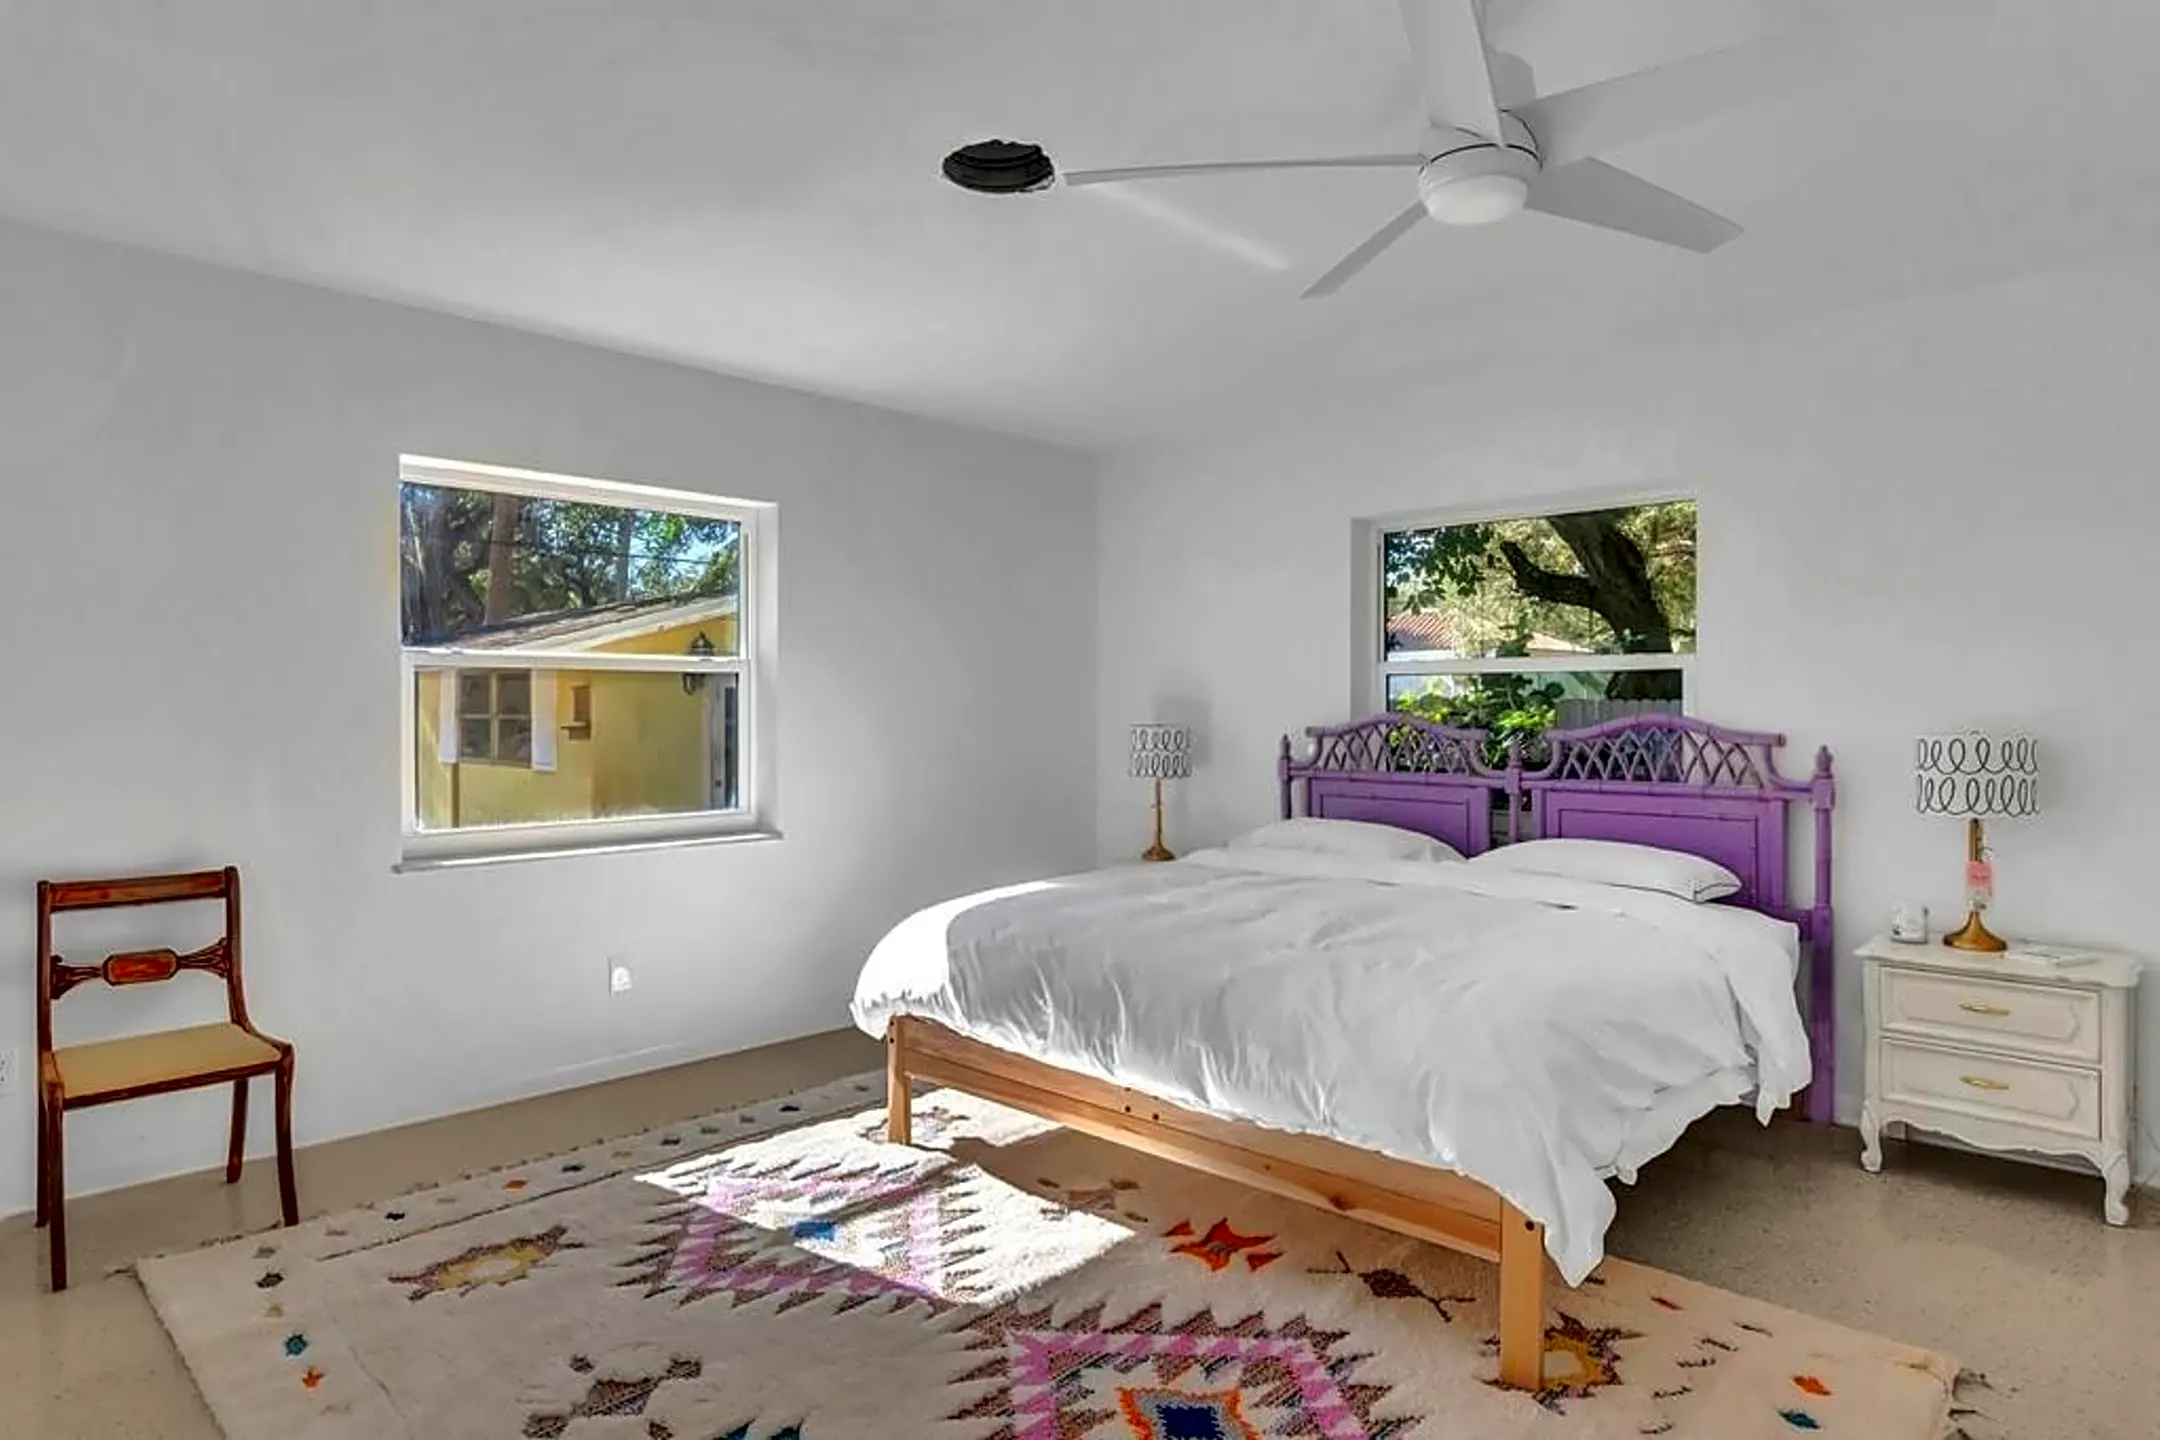 Bedroom - 328 Indian Lilac Rd - Vero Beach, FL